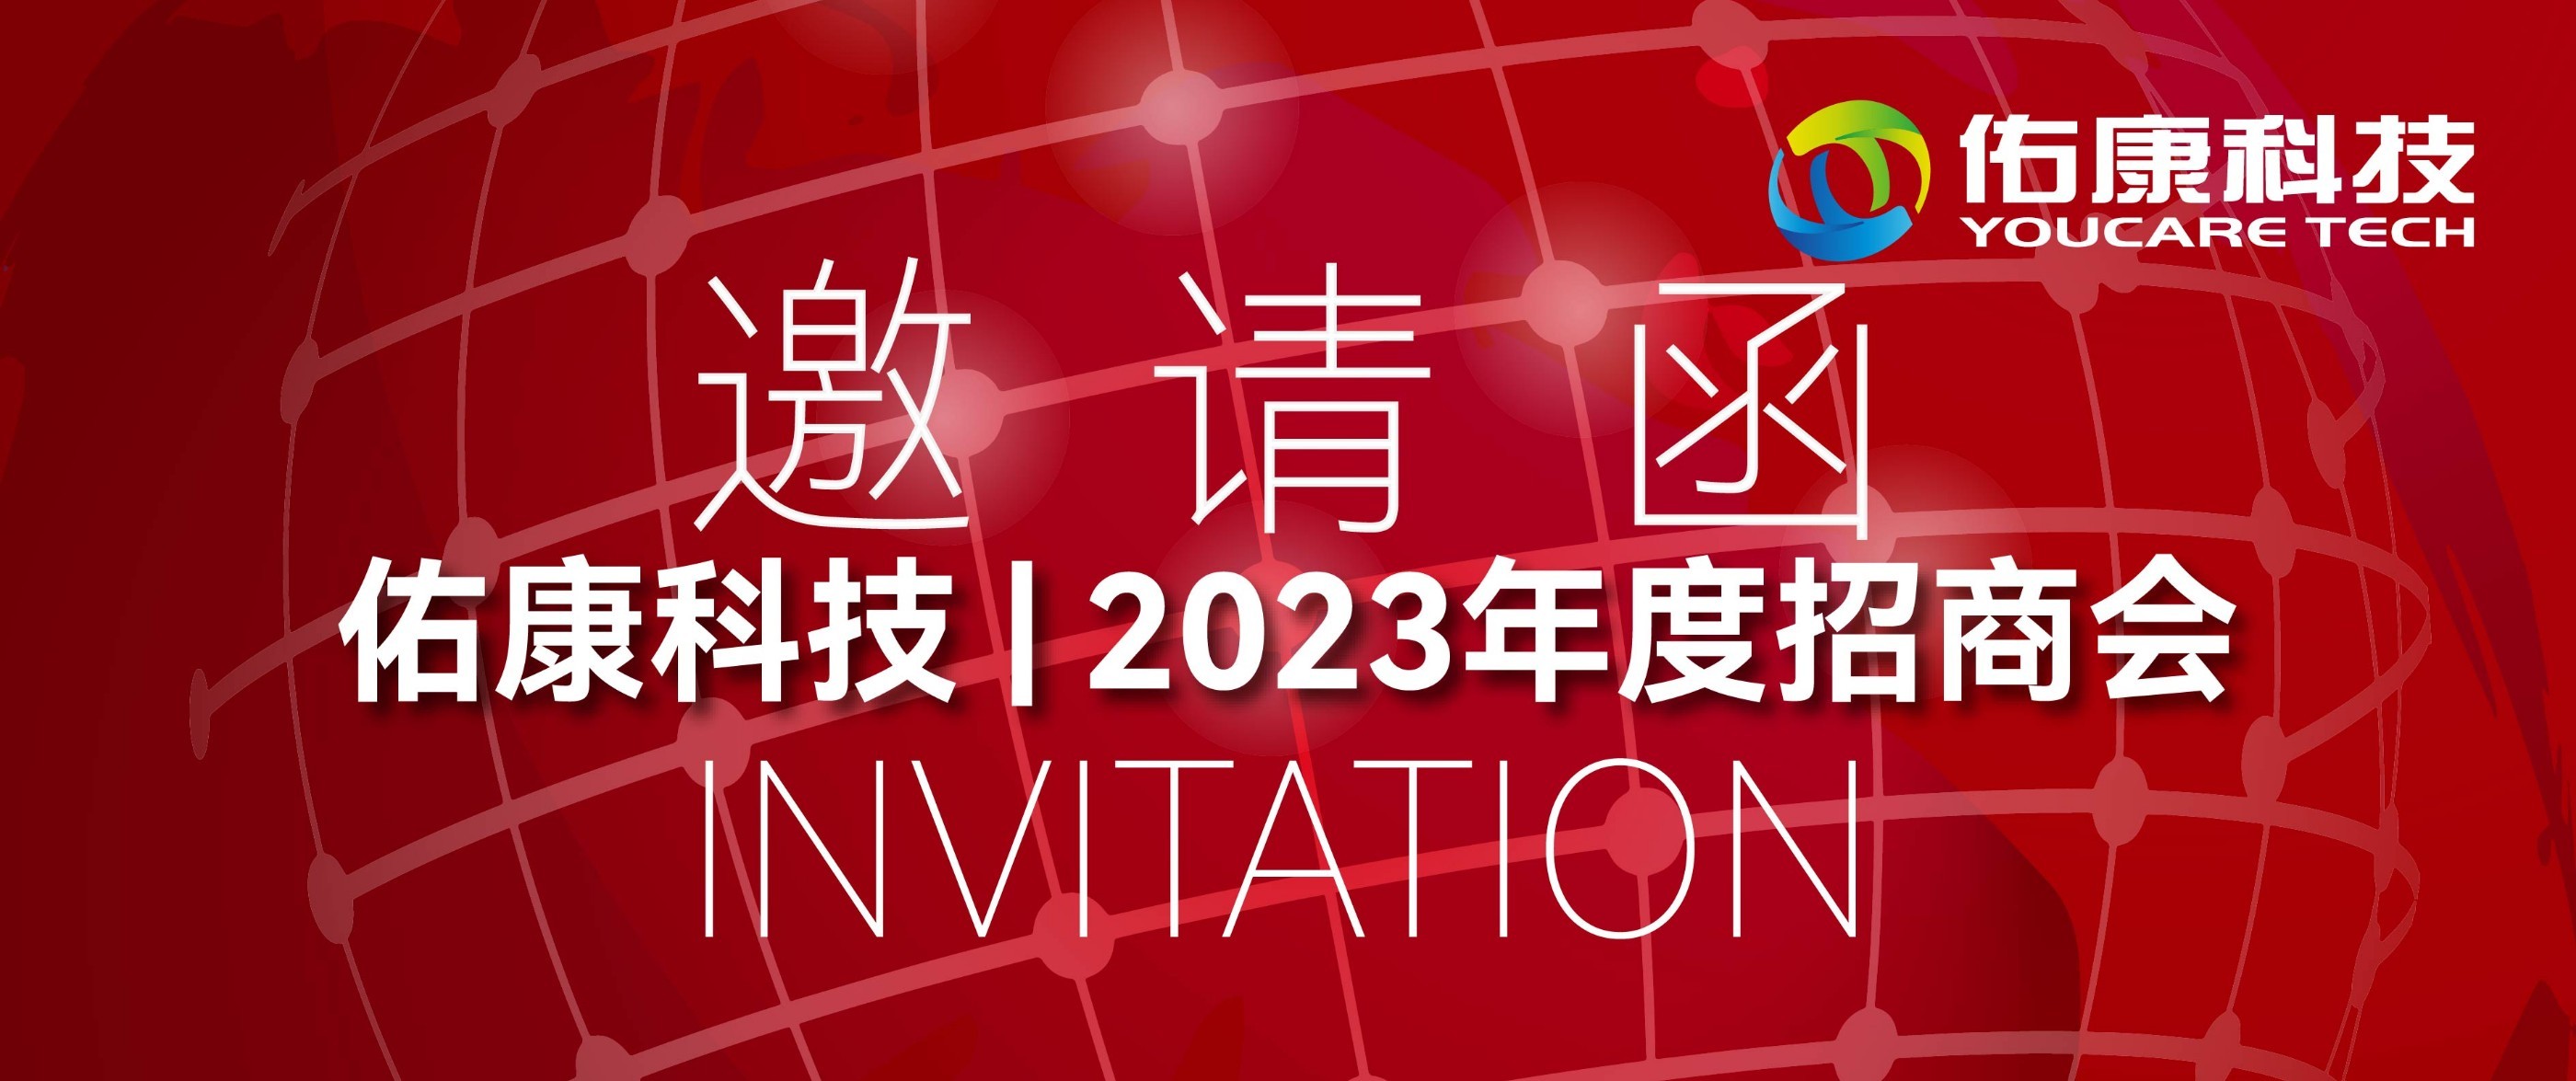 Invitation | you are cordially invited to 2023